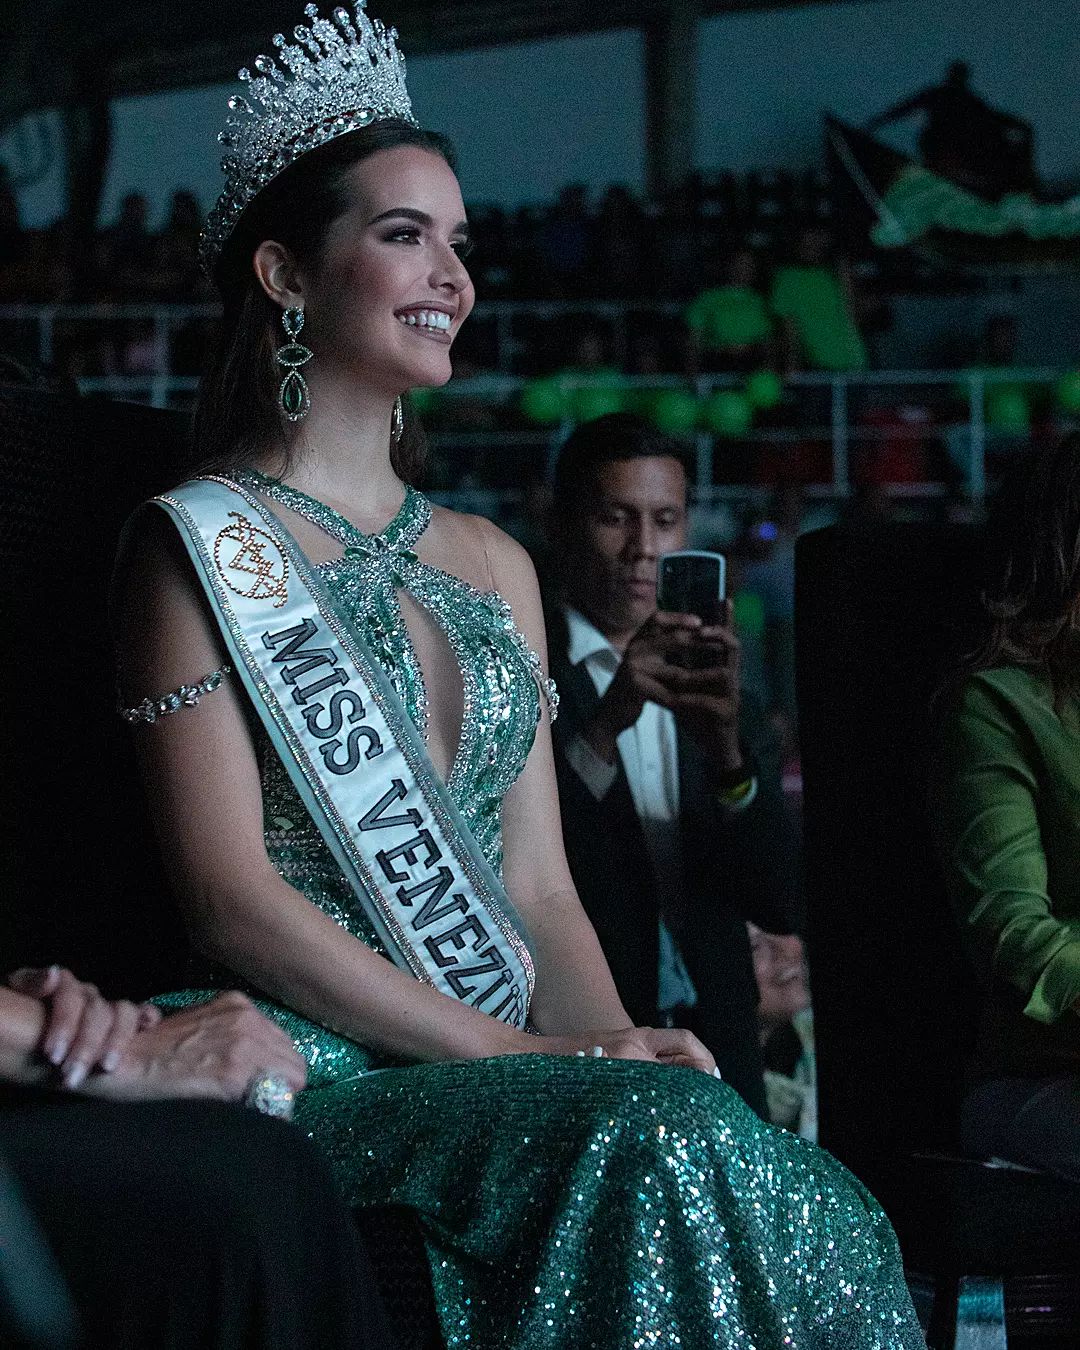 MissVenezuela2021 - amanda dudamel newman, 1st runner-up de miss universe 2022. - Página 40 33992711